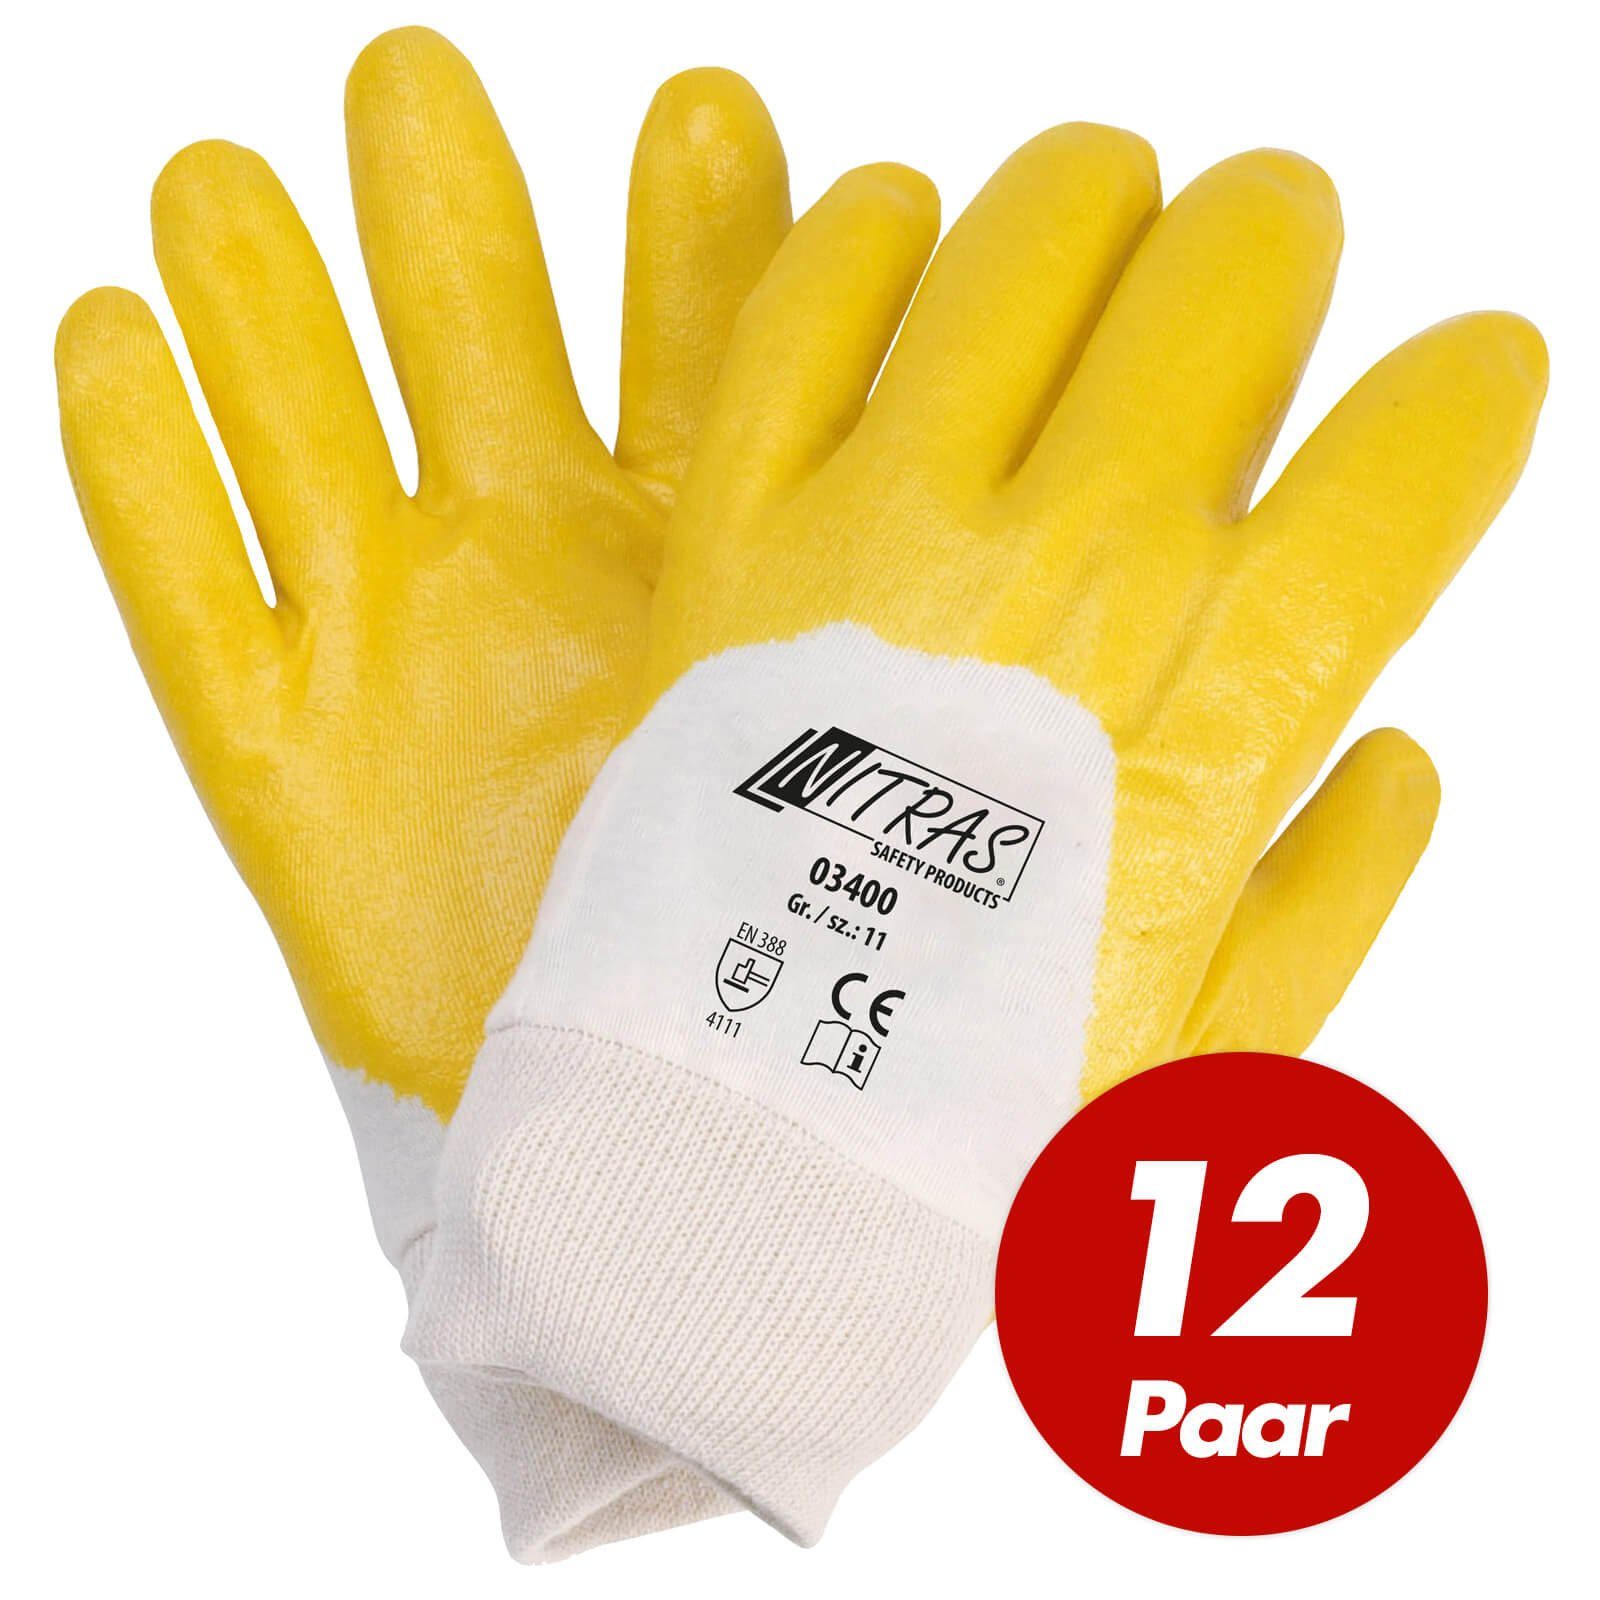 Nitras Nitril-Handschuhe NITRAS 03400 Nitrilhandschuhe, Arbeitshandschuhe - VPE 12 Paar (Spar-Set)